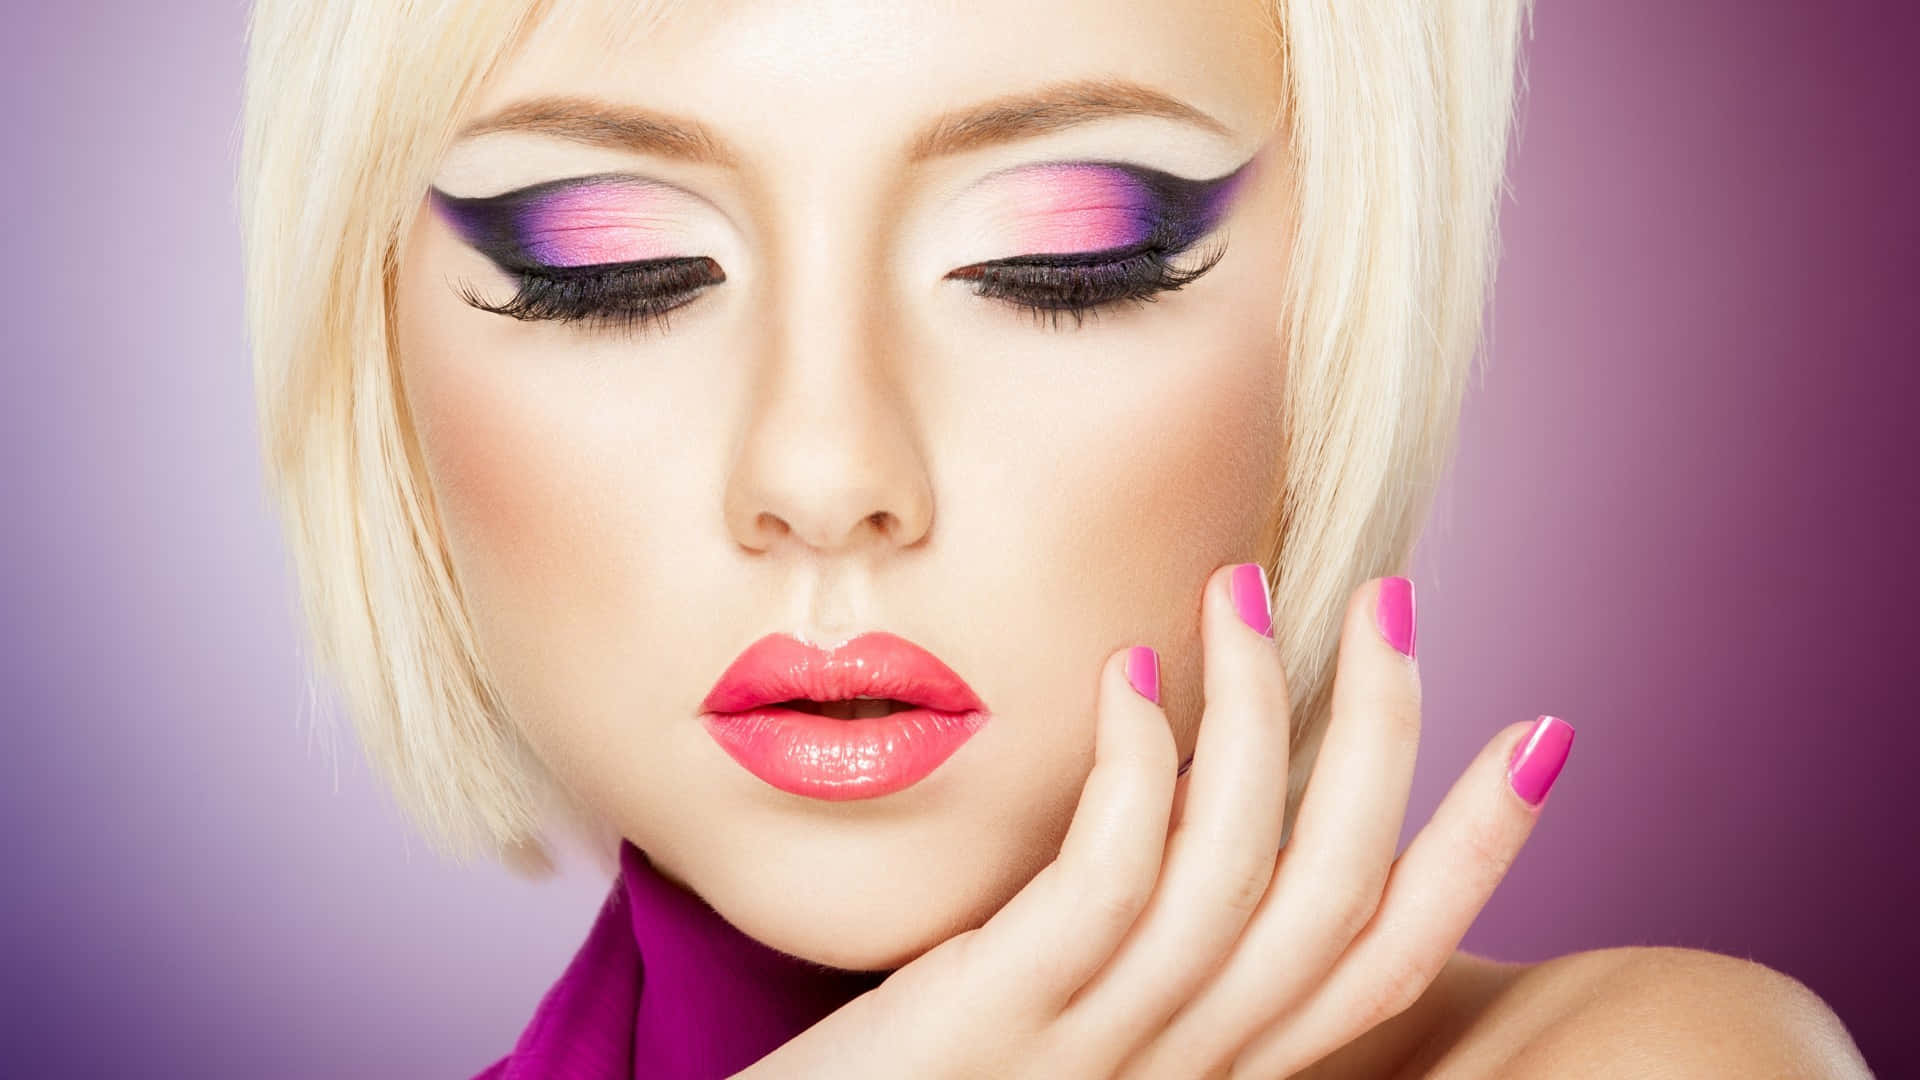 [100+] Pink Makeup Wallpapers | Wallpapers.com